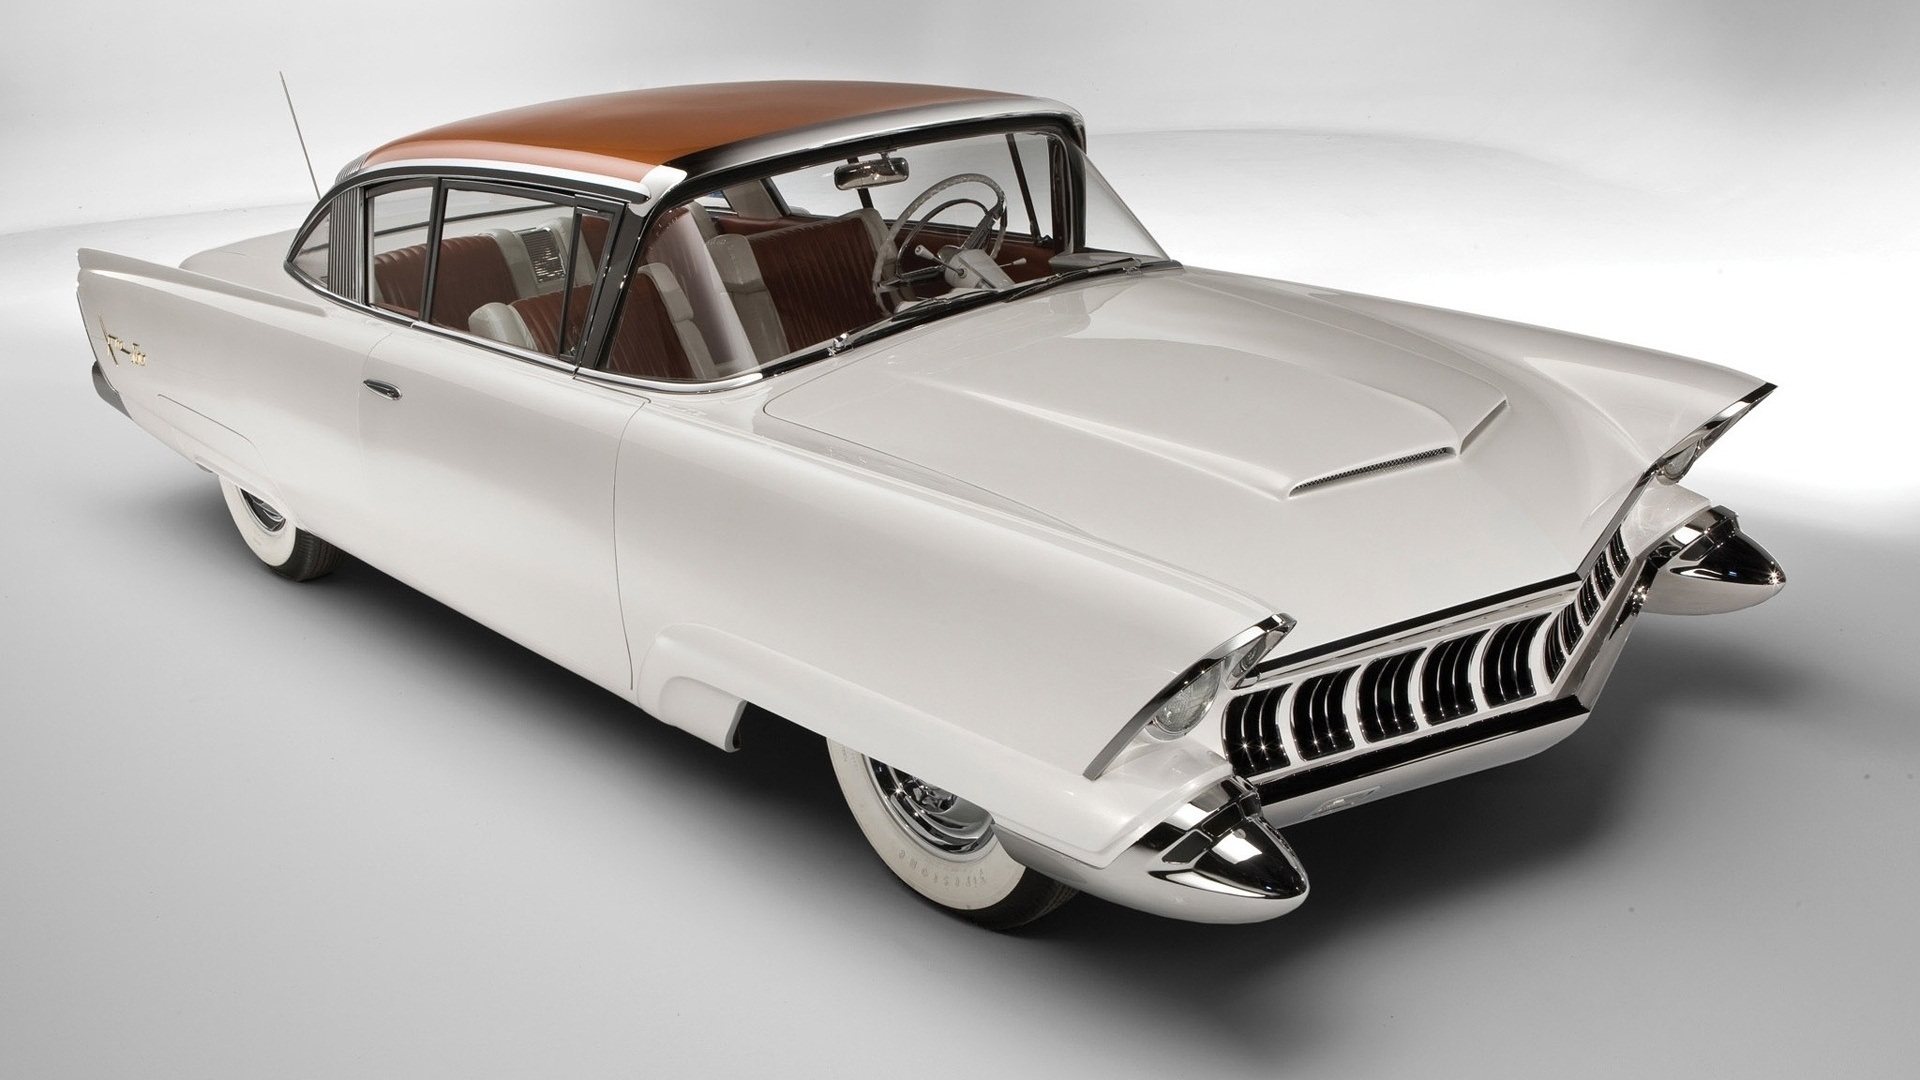 1954 Mercury XM 800 Coupe - Classic vintage vehicle in vibrant wallpaper design.